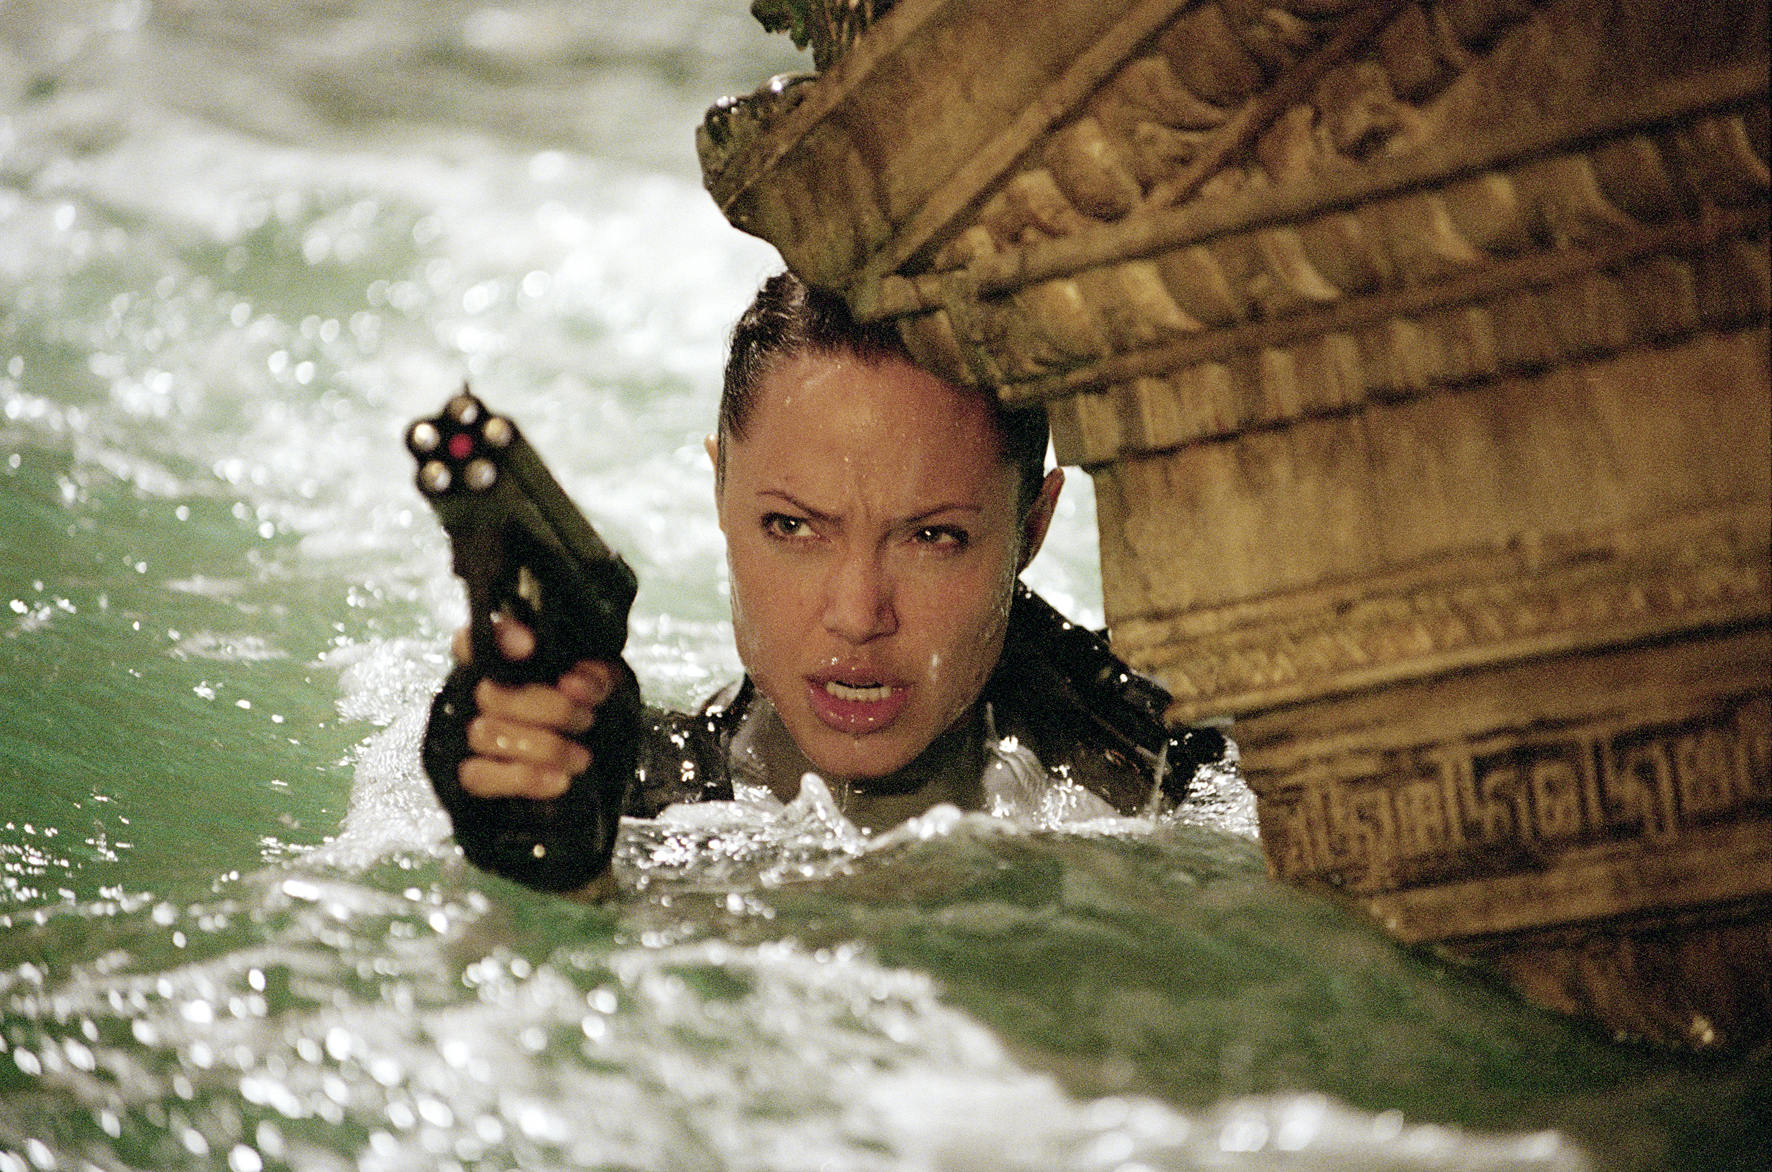 2003 Lara Croft: Tomb Raider - The Cradle Of Life